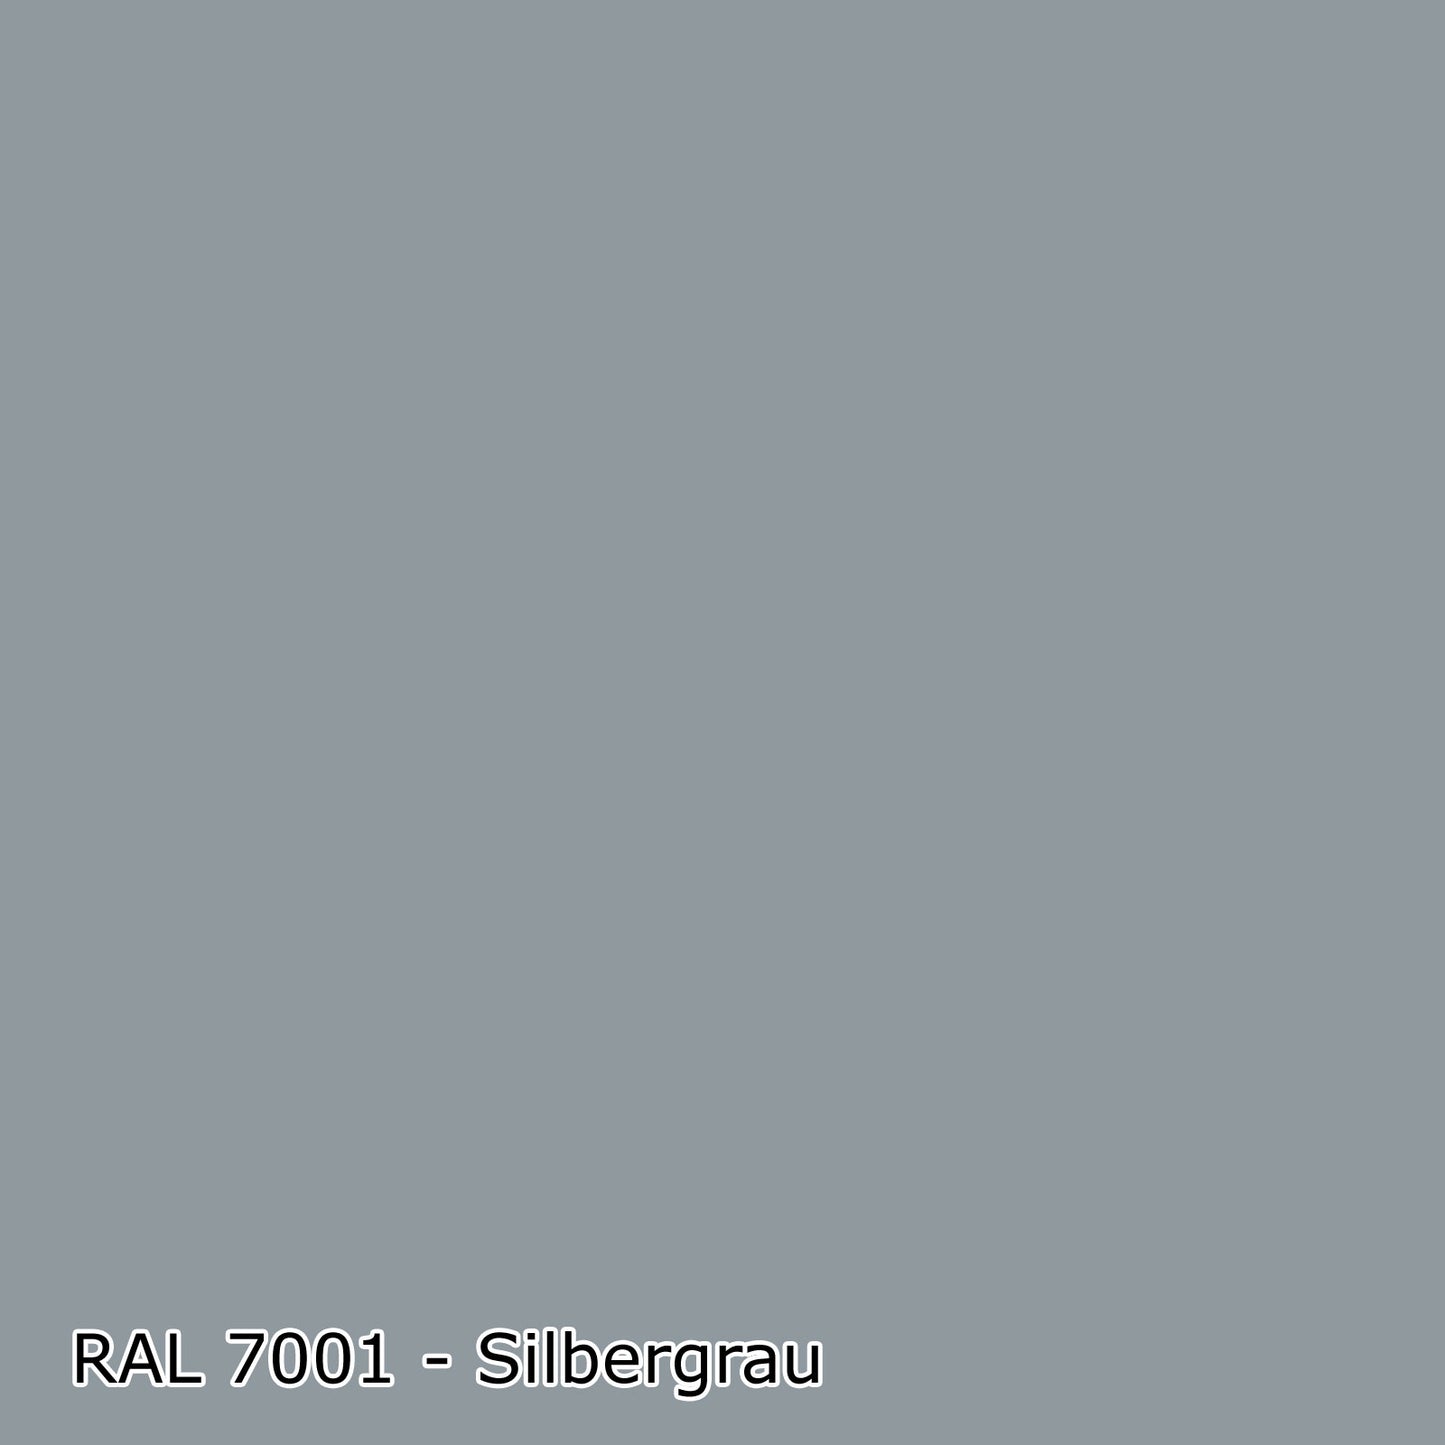 2,5 L Acryl Buntlack, Acryllack, RAL Farbwahl - SEIDENGLANZ (RAL 1000 - 9018)